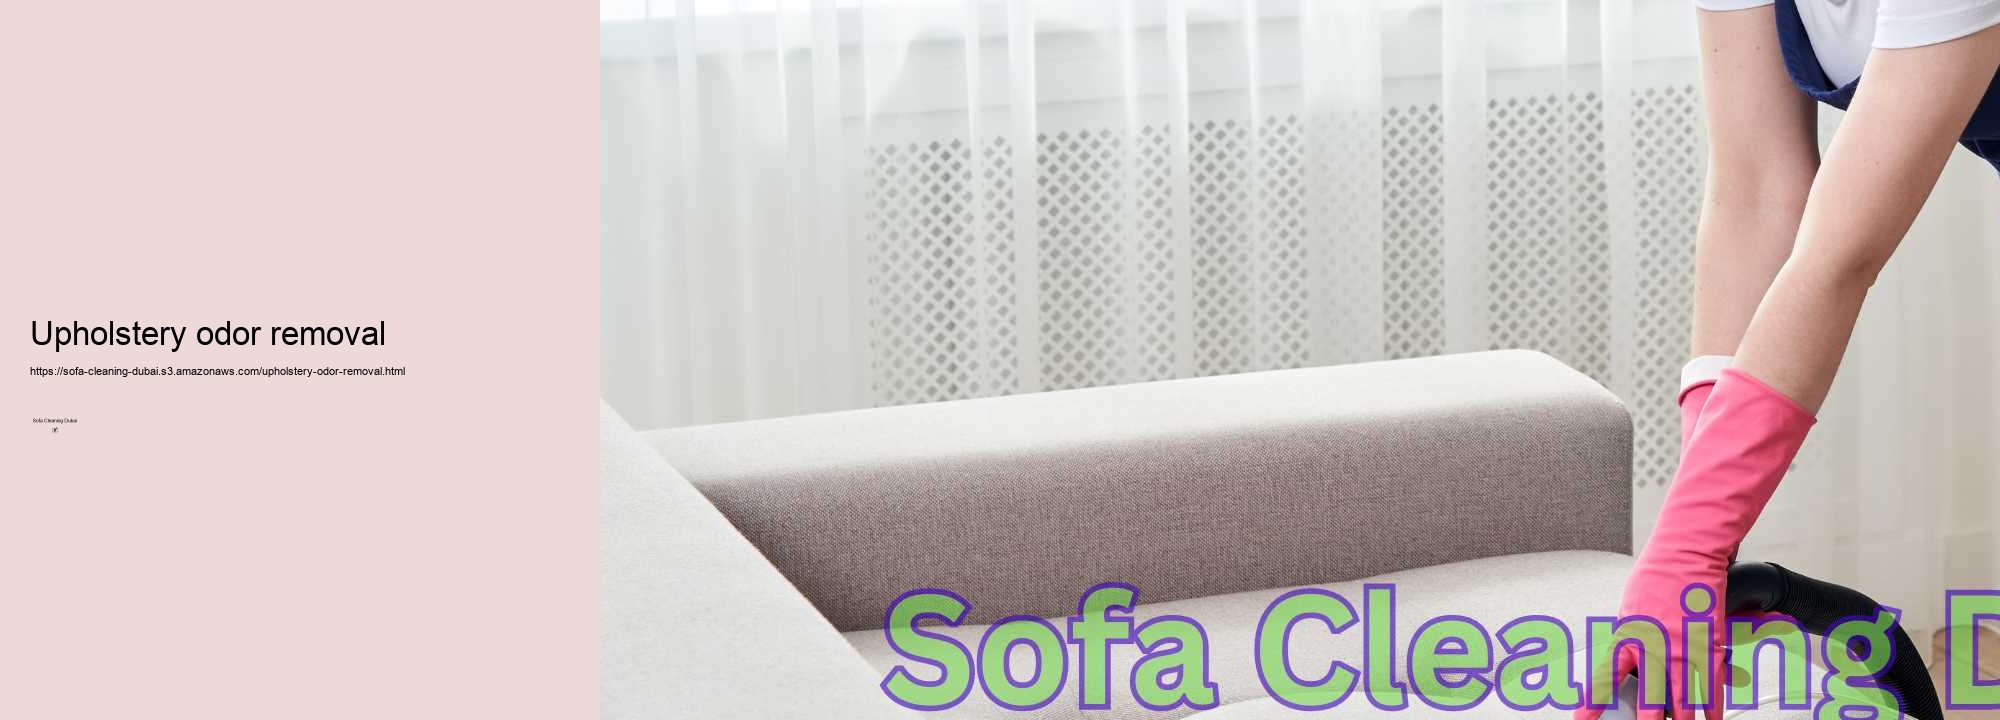 Upholstery odor removal